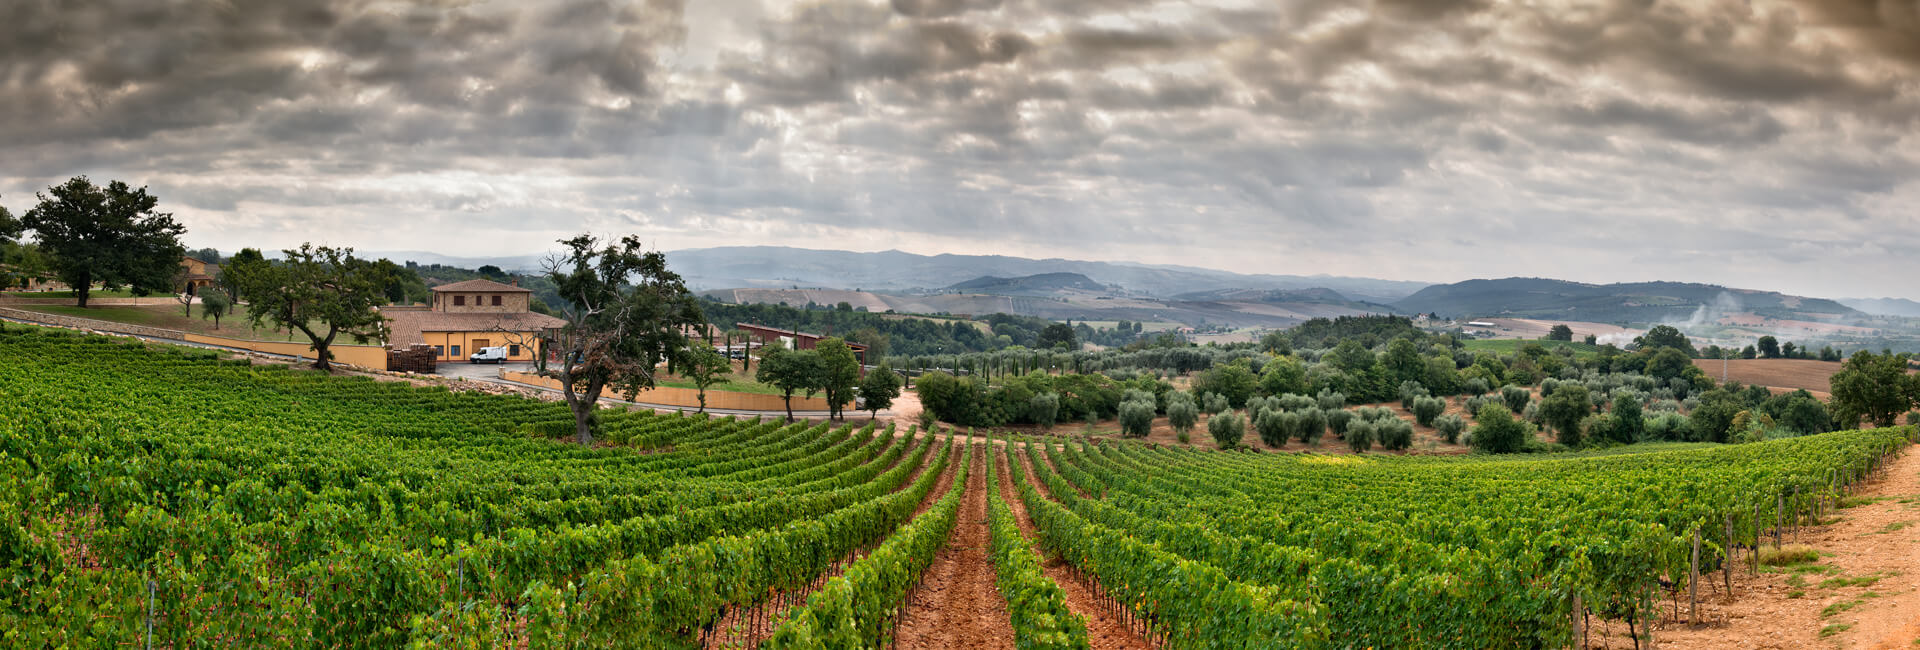 tuscany-wines-terenzi-scansano-maremma